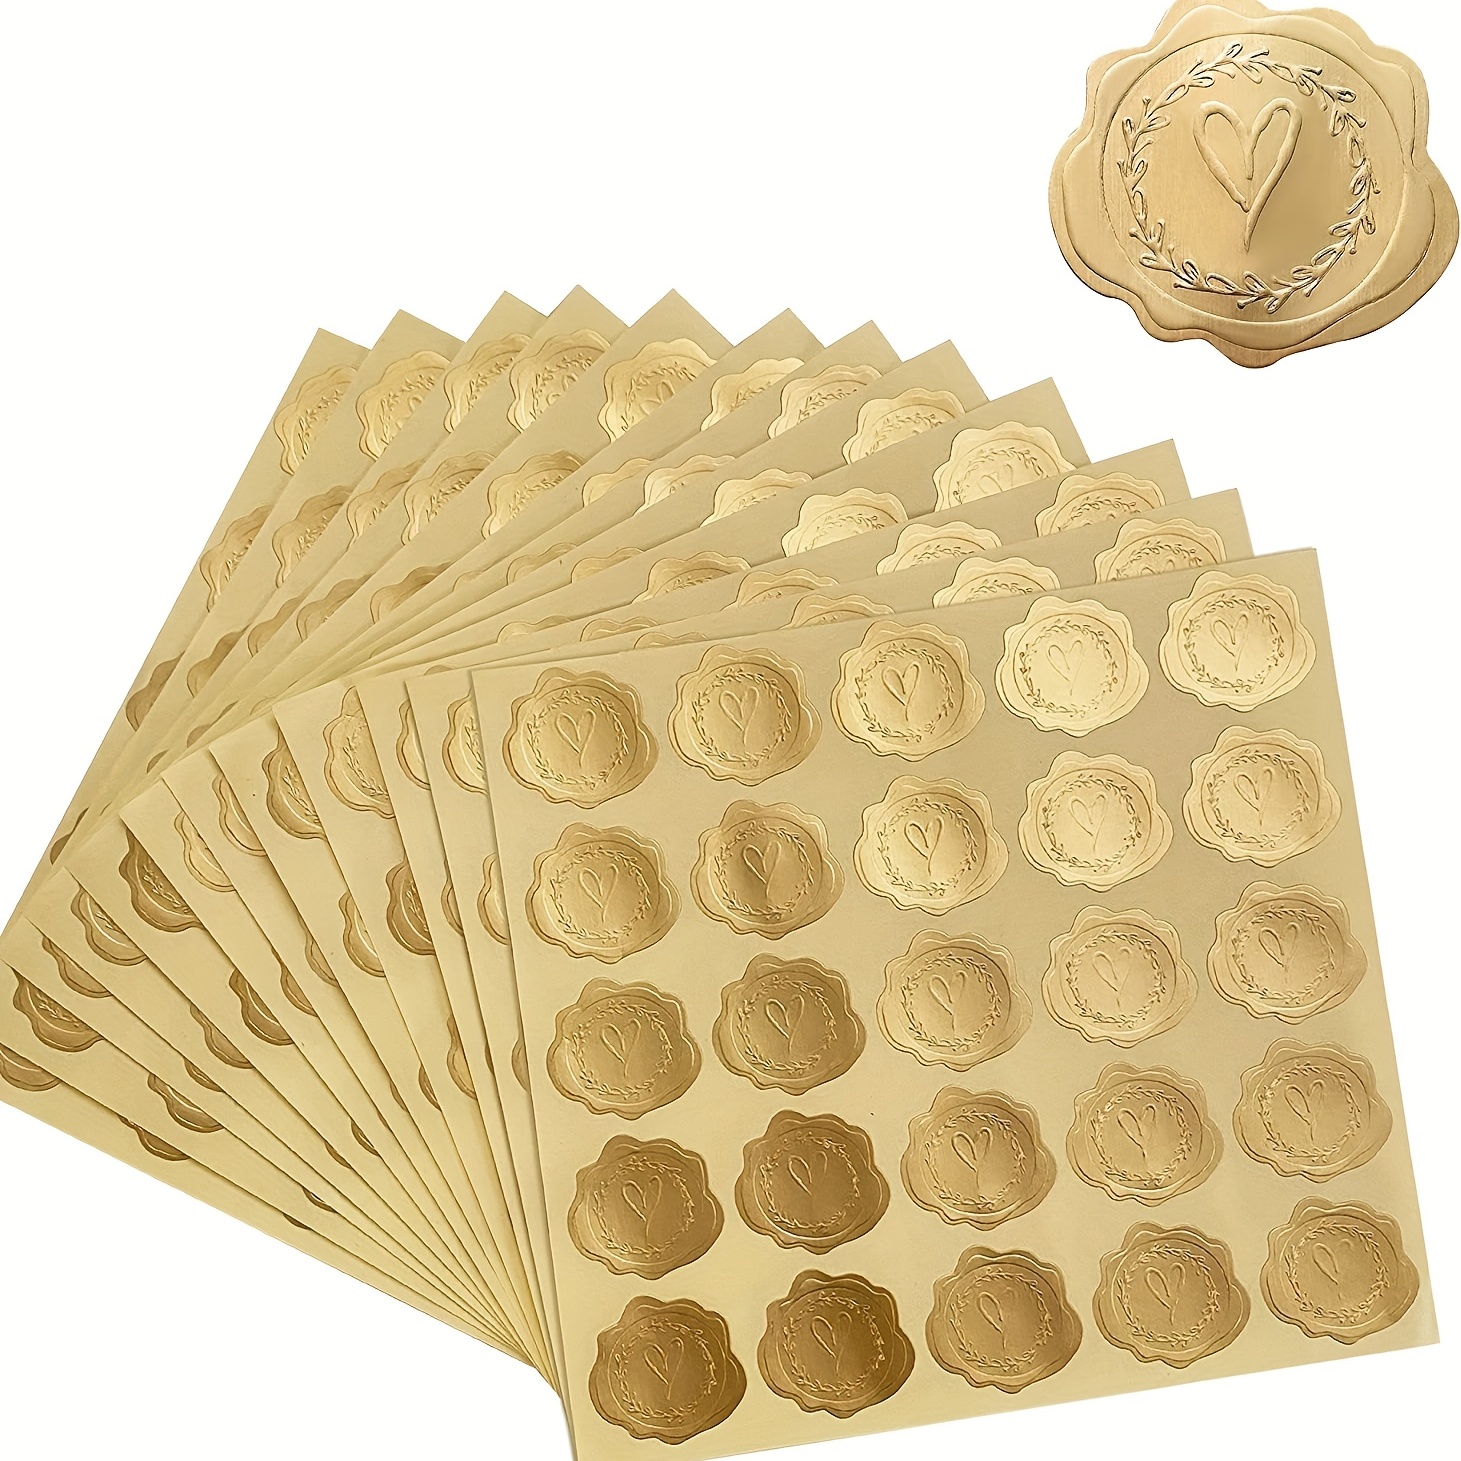  25Pcs Wax Seal Stickers Handmade Envelope Seals Self